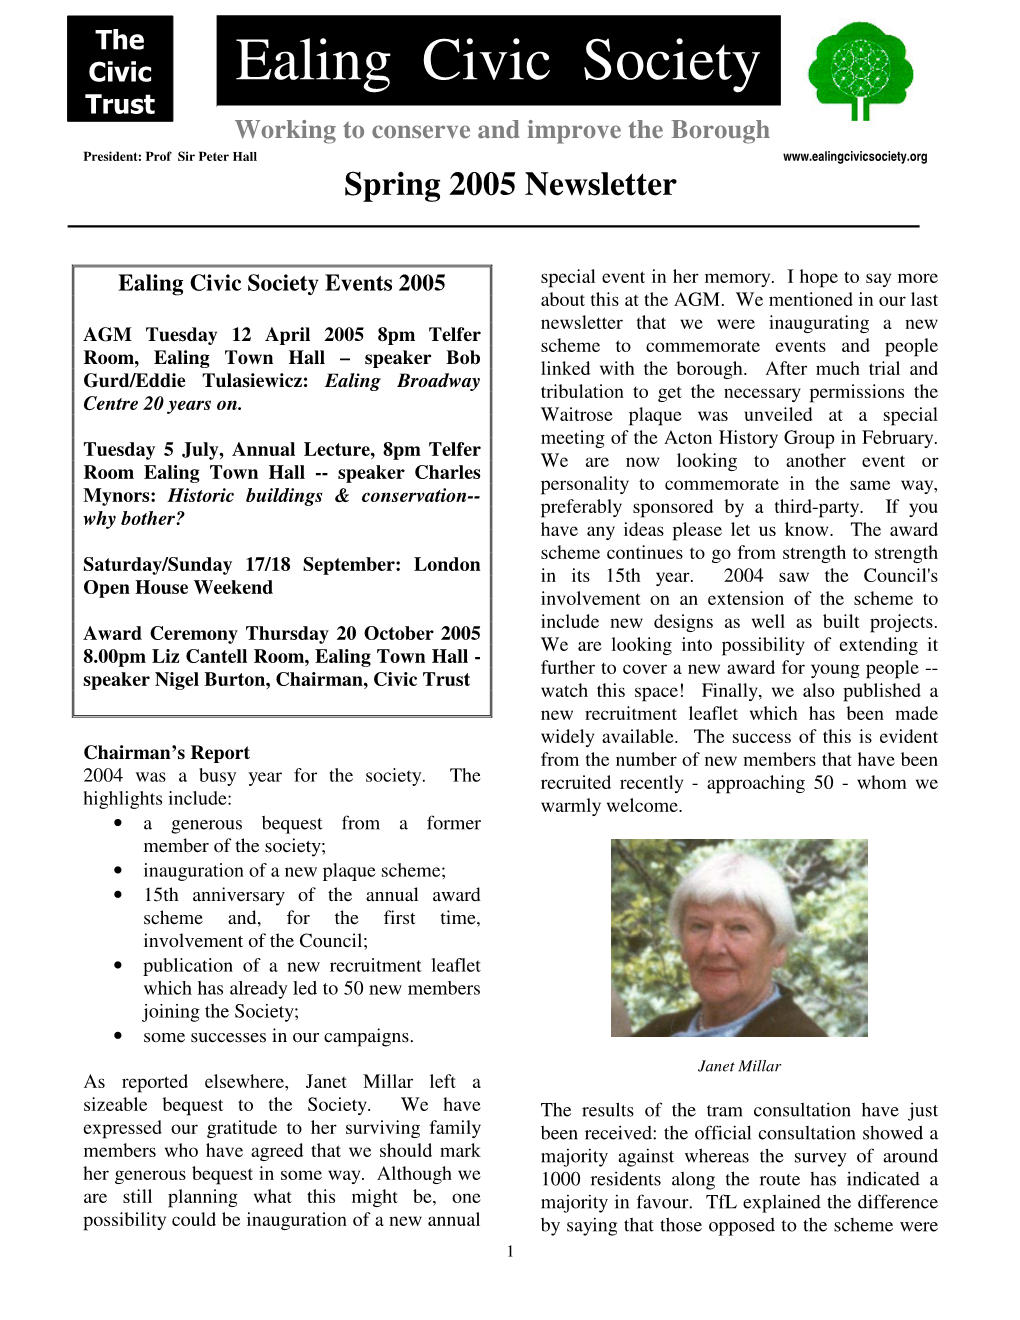 Ealing Civic Society Newsletter – Spring 2005